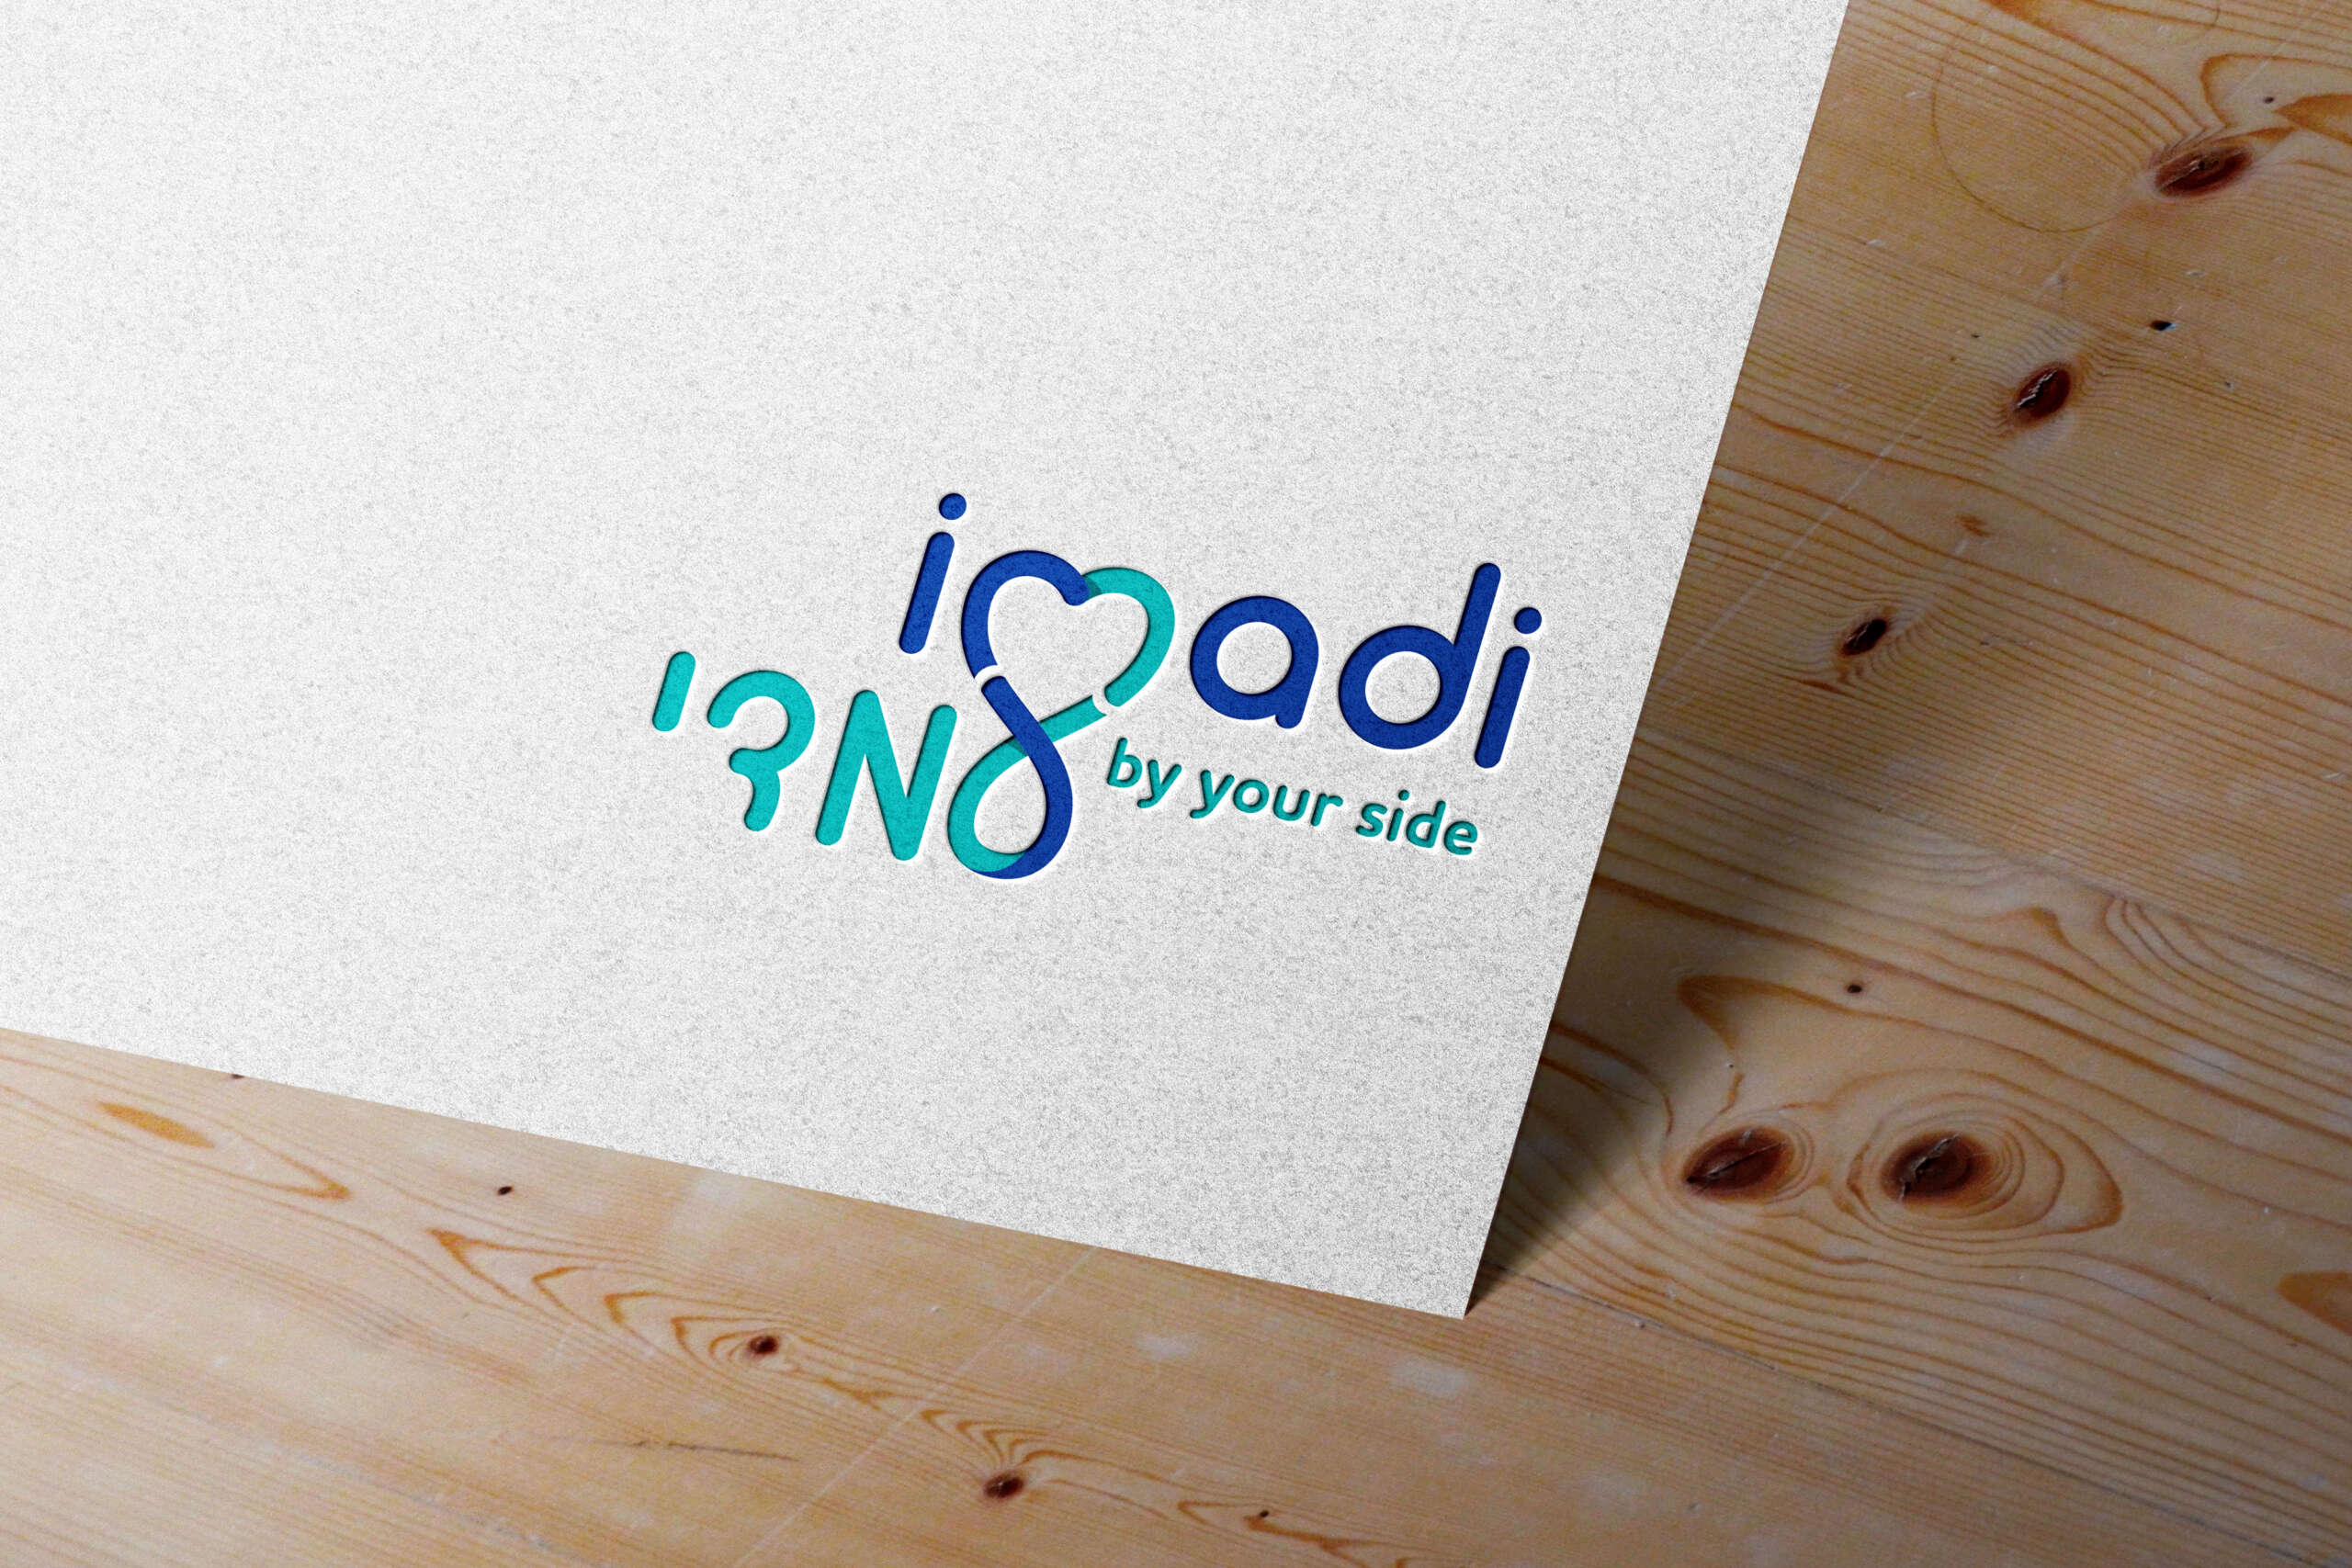 imadi logo on a paper